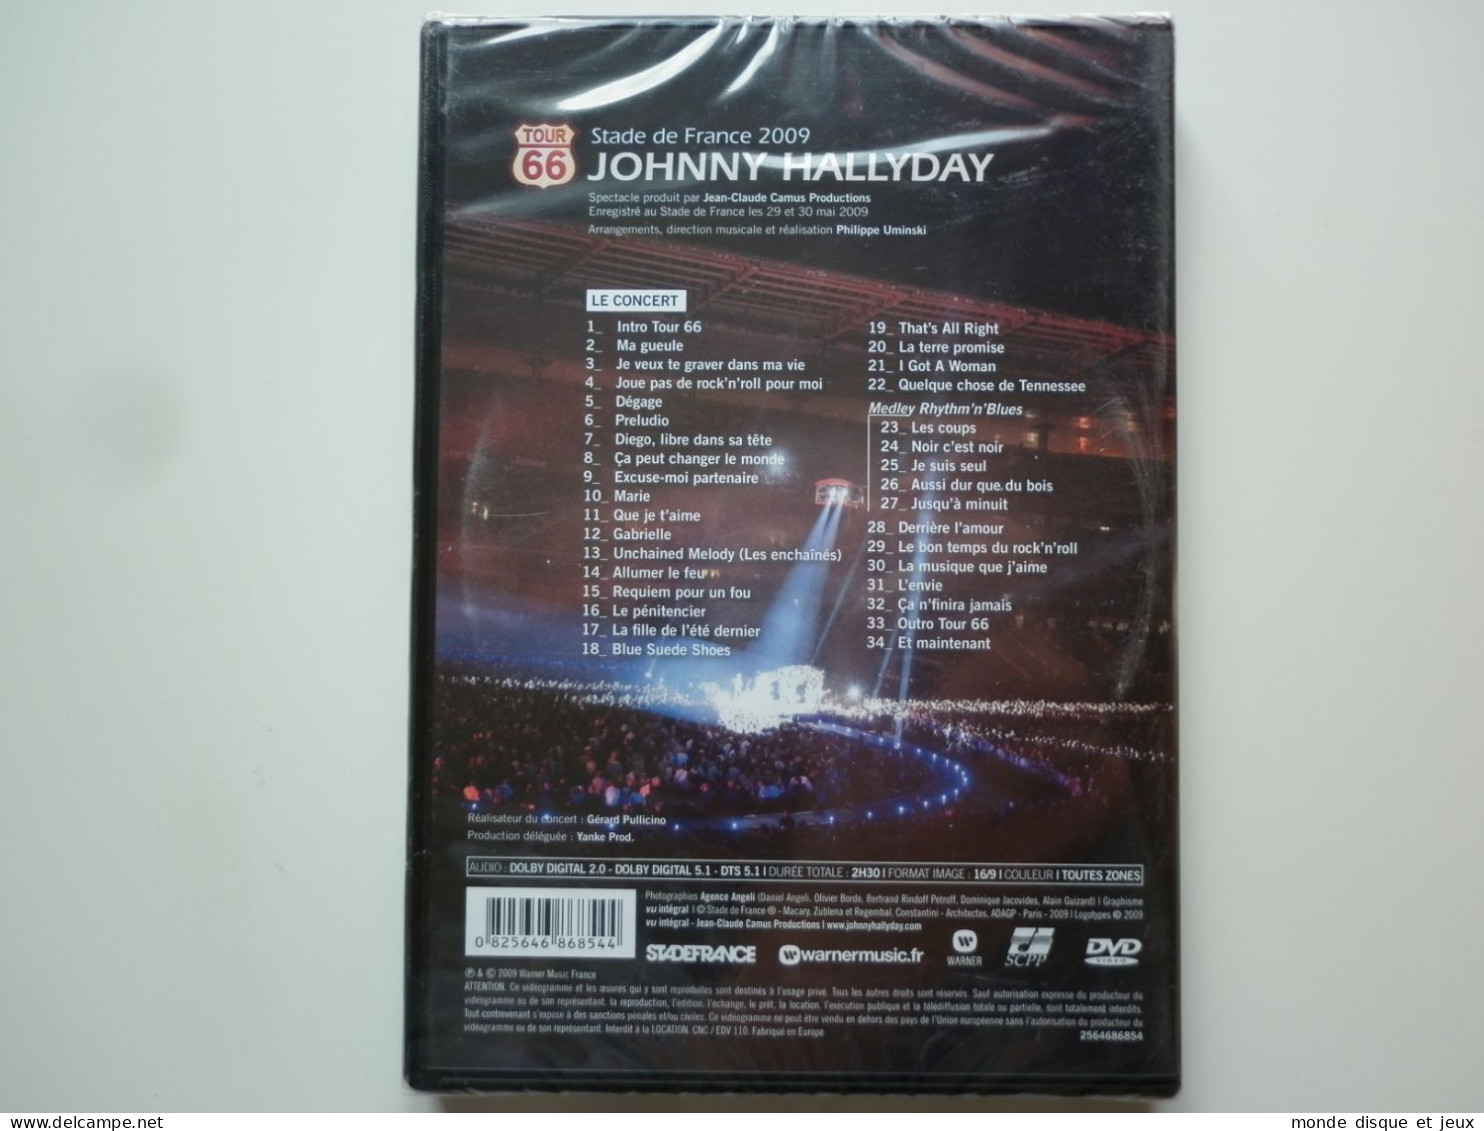 Johnny Hallyday Dvd Stade De France 2009 Tour 66 - Musik-DVD's